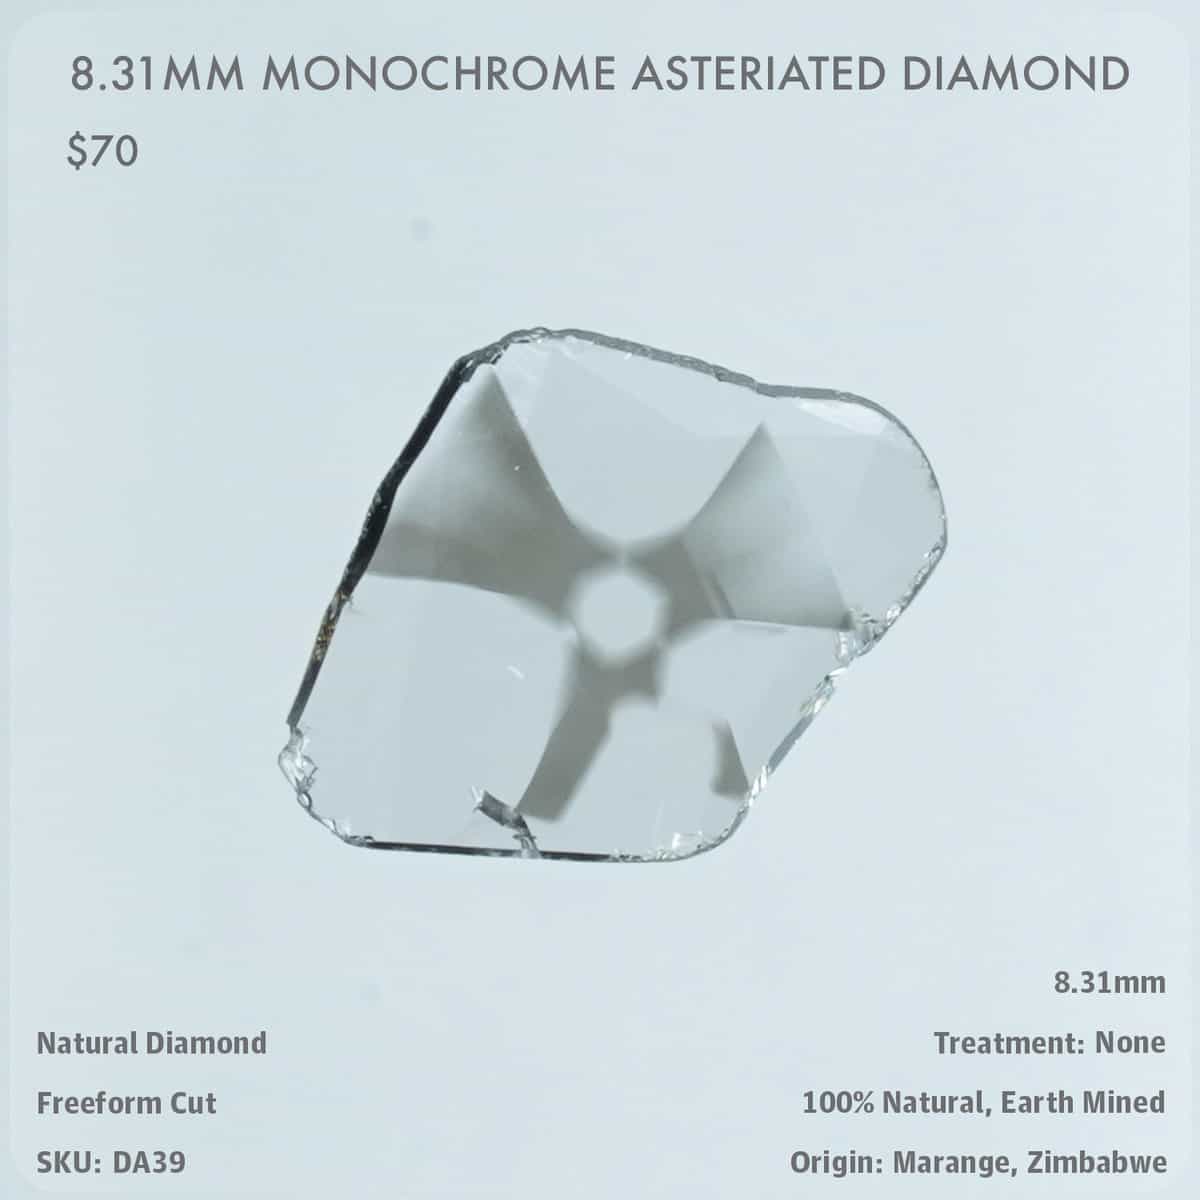 8.31mm Monochrome Asteriated Diamond